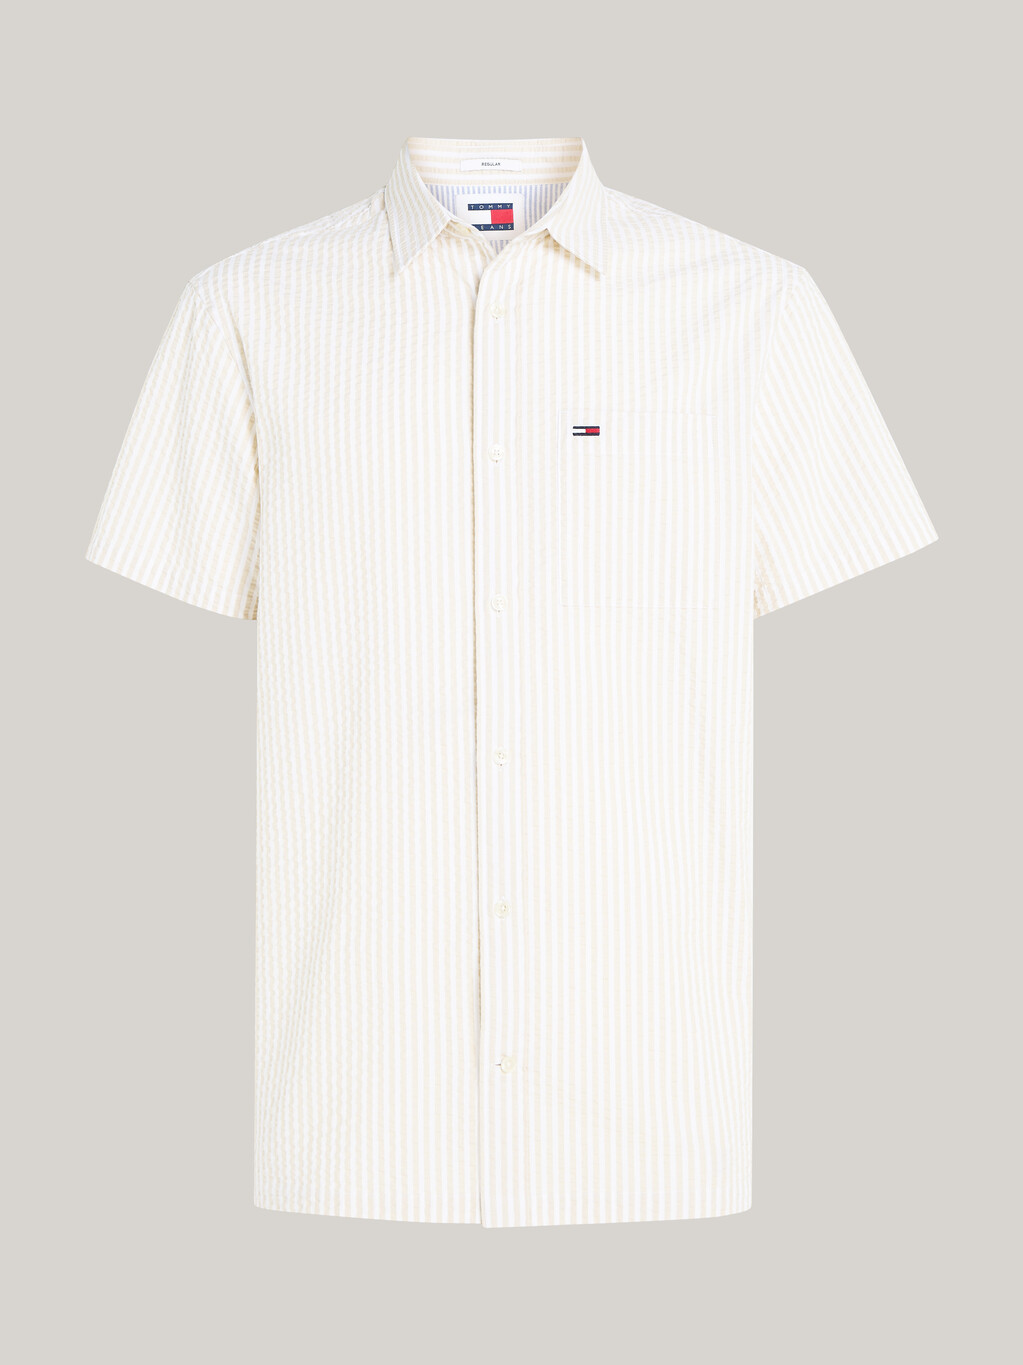 Stripe Seersucker Short Sleeve Shirt, White / Newsprint, hi-res